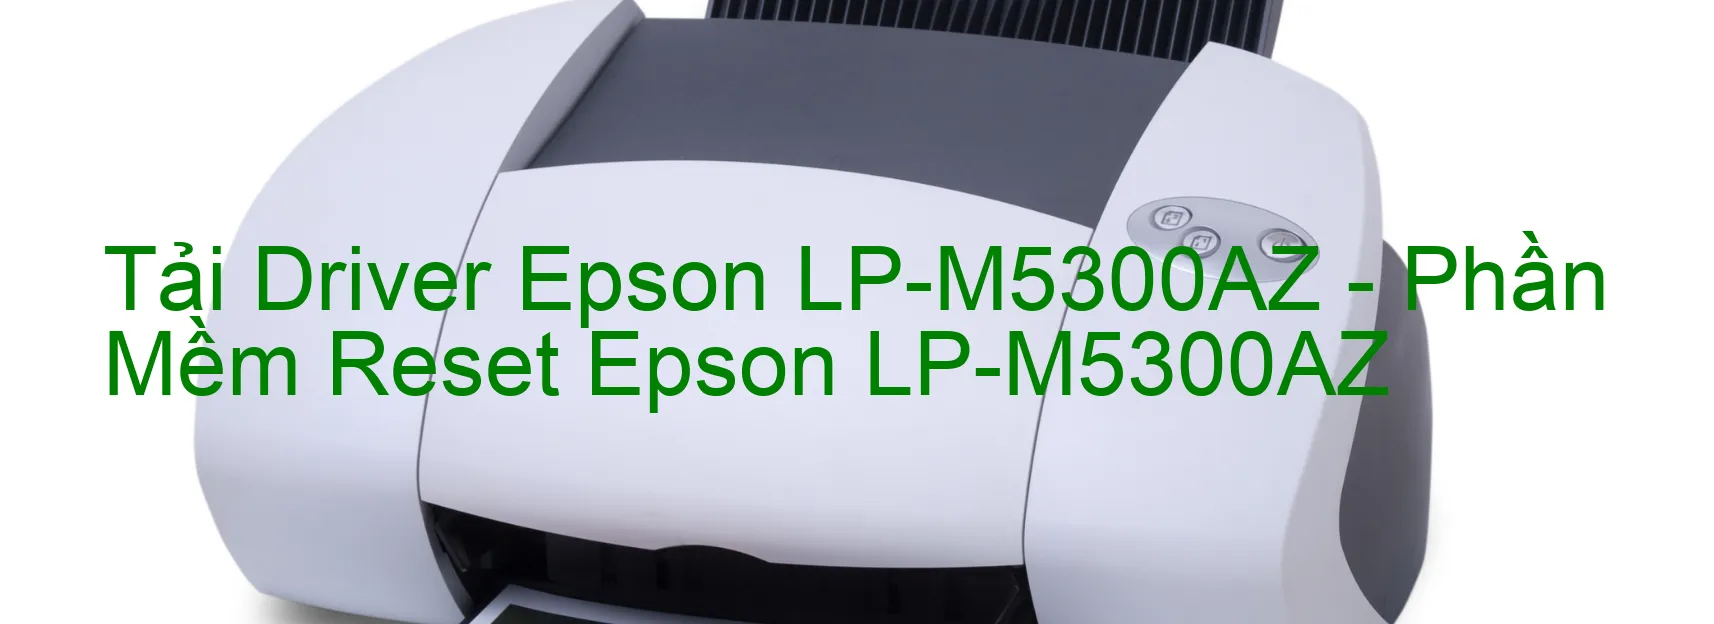 Driver Epson LP-M5300AZ, Phần Mềm Reset Epson LP-M5300AZ